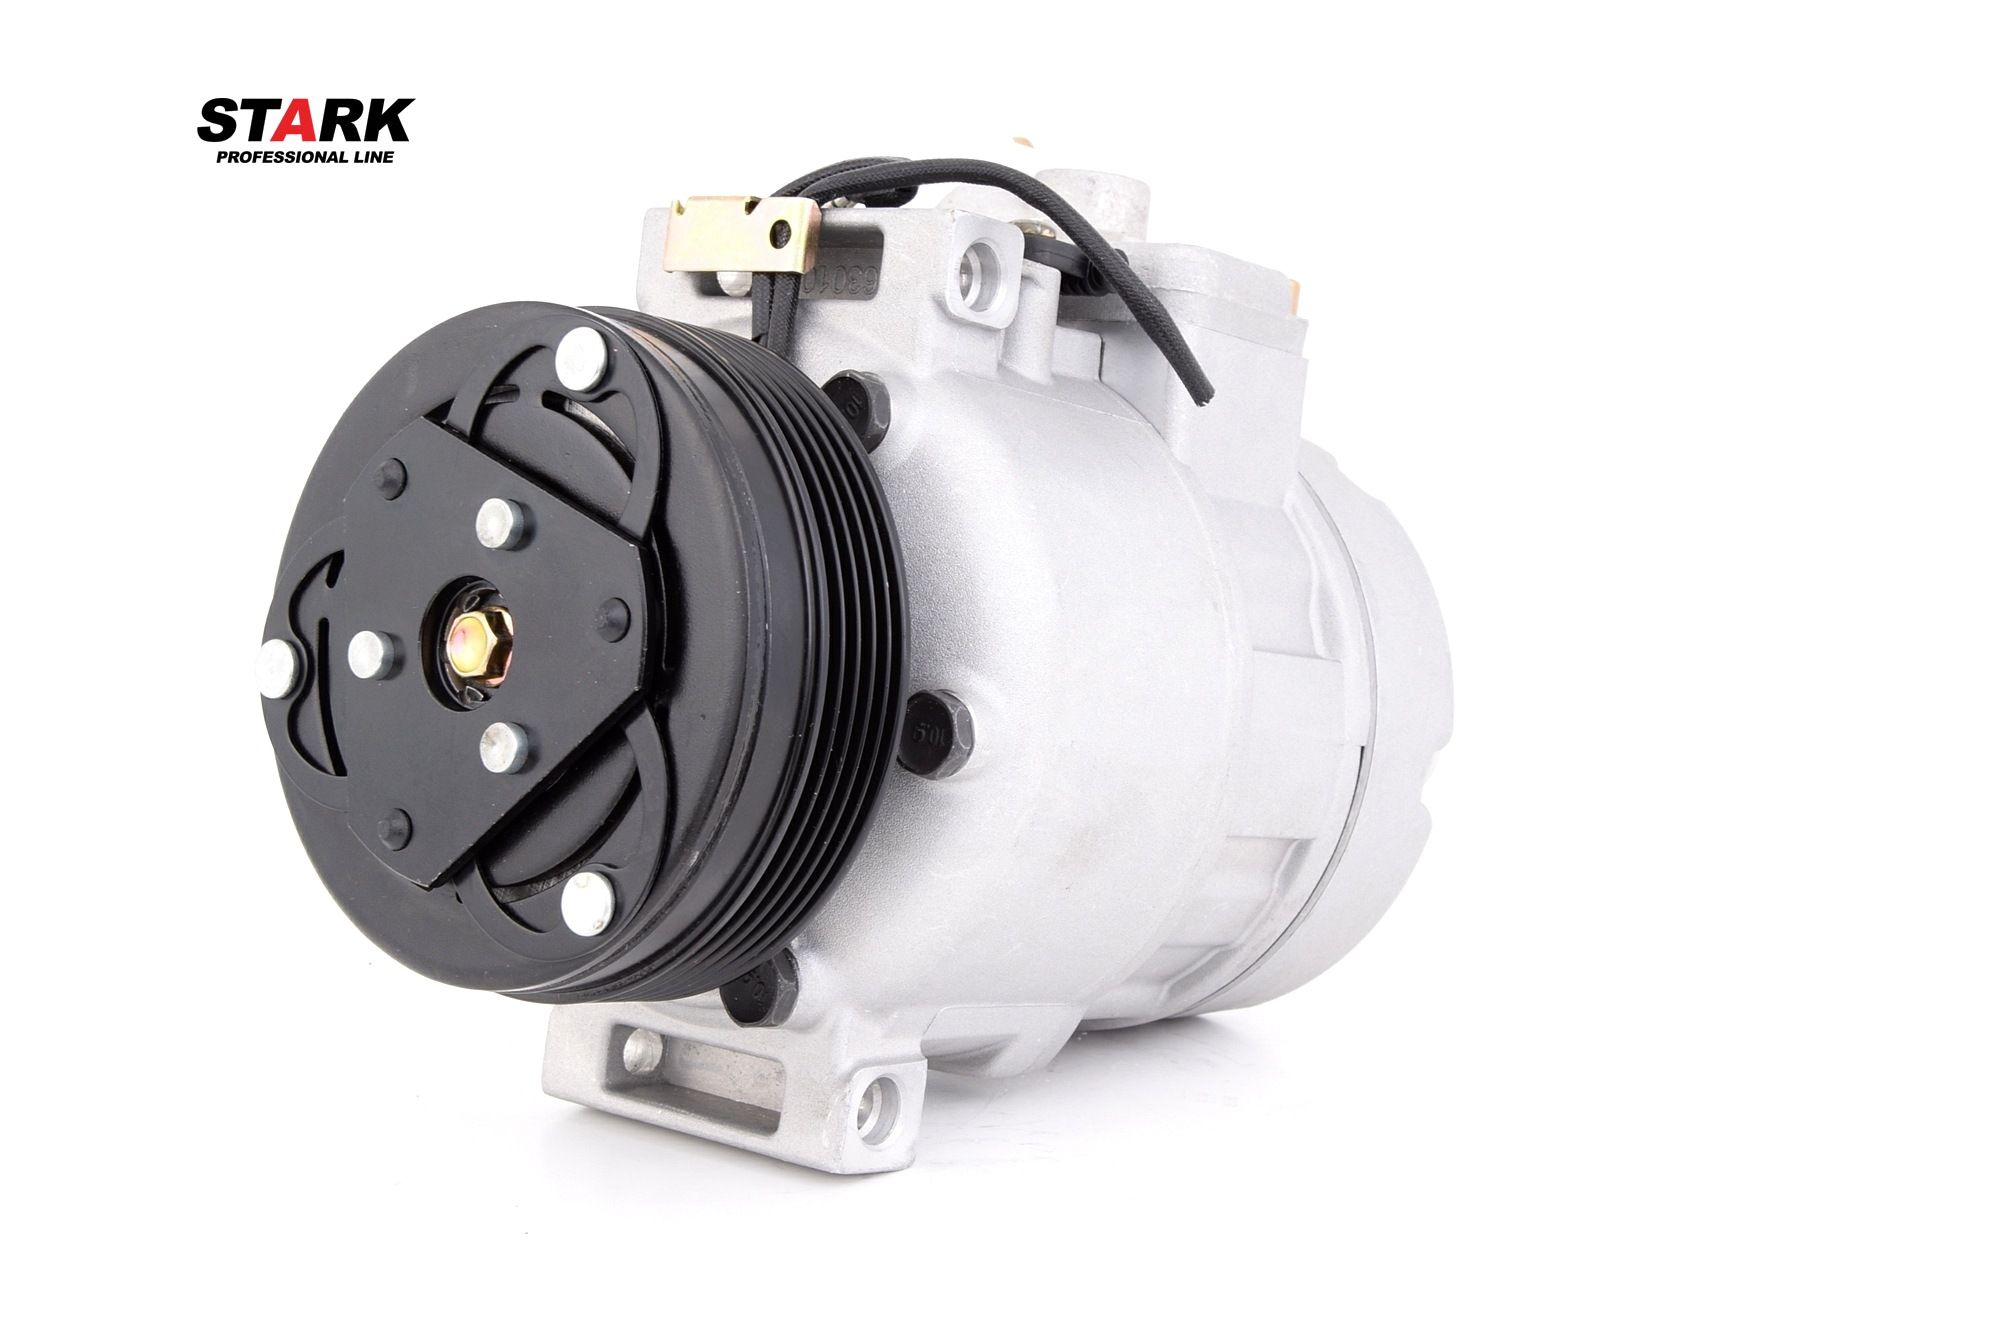 STARK SKKM-0340095 Air conditioning compressor 7SBU16C, CSV717, PAG 46, R 134a, with PAG compressor oil